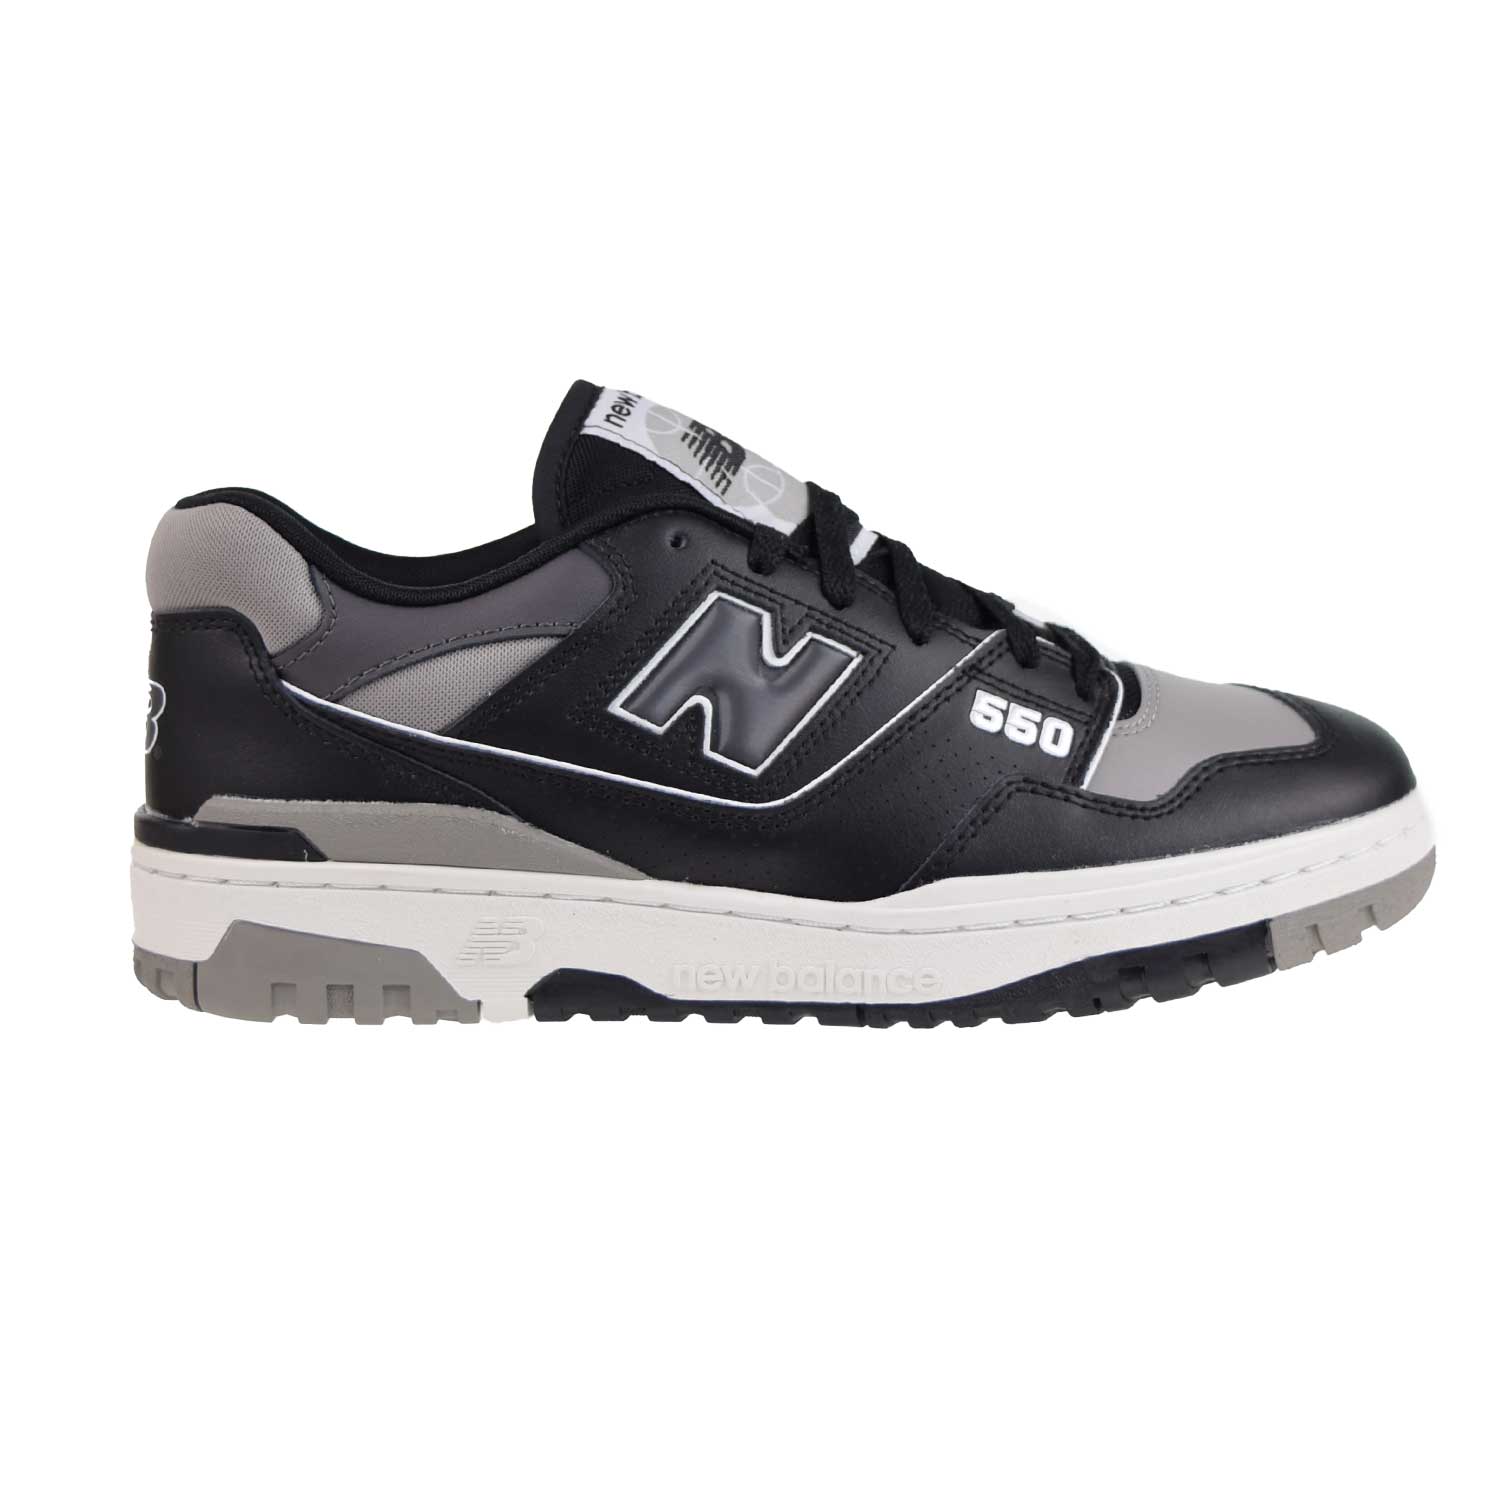 New Balance 550 Men's Shoes Black-White-Grey bb550-sr1